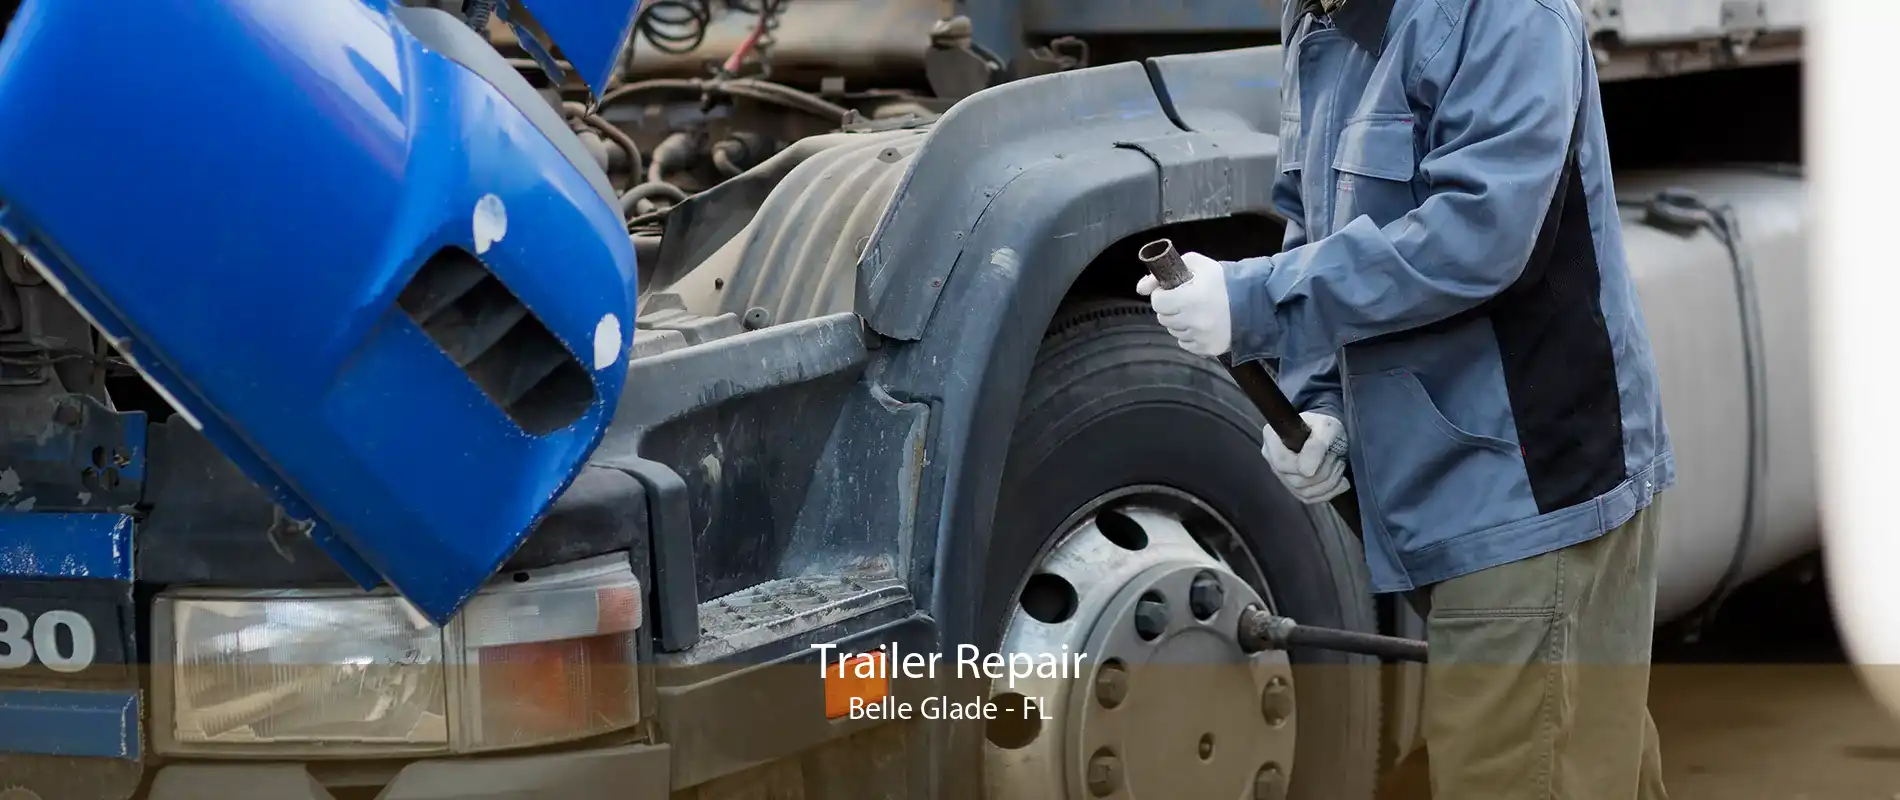 Trailer Repair Belle Glade - FL